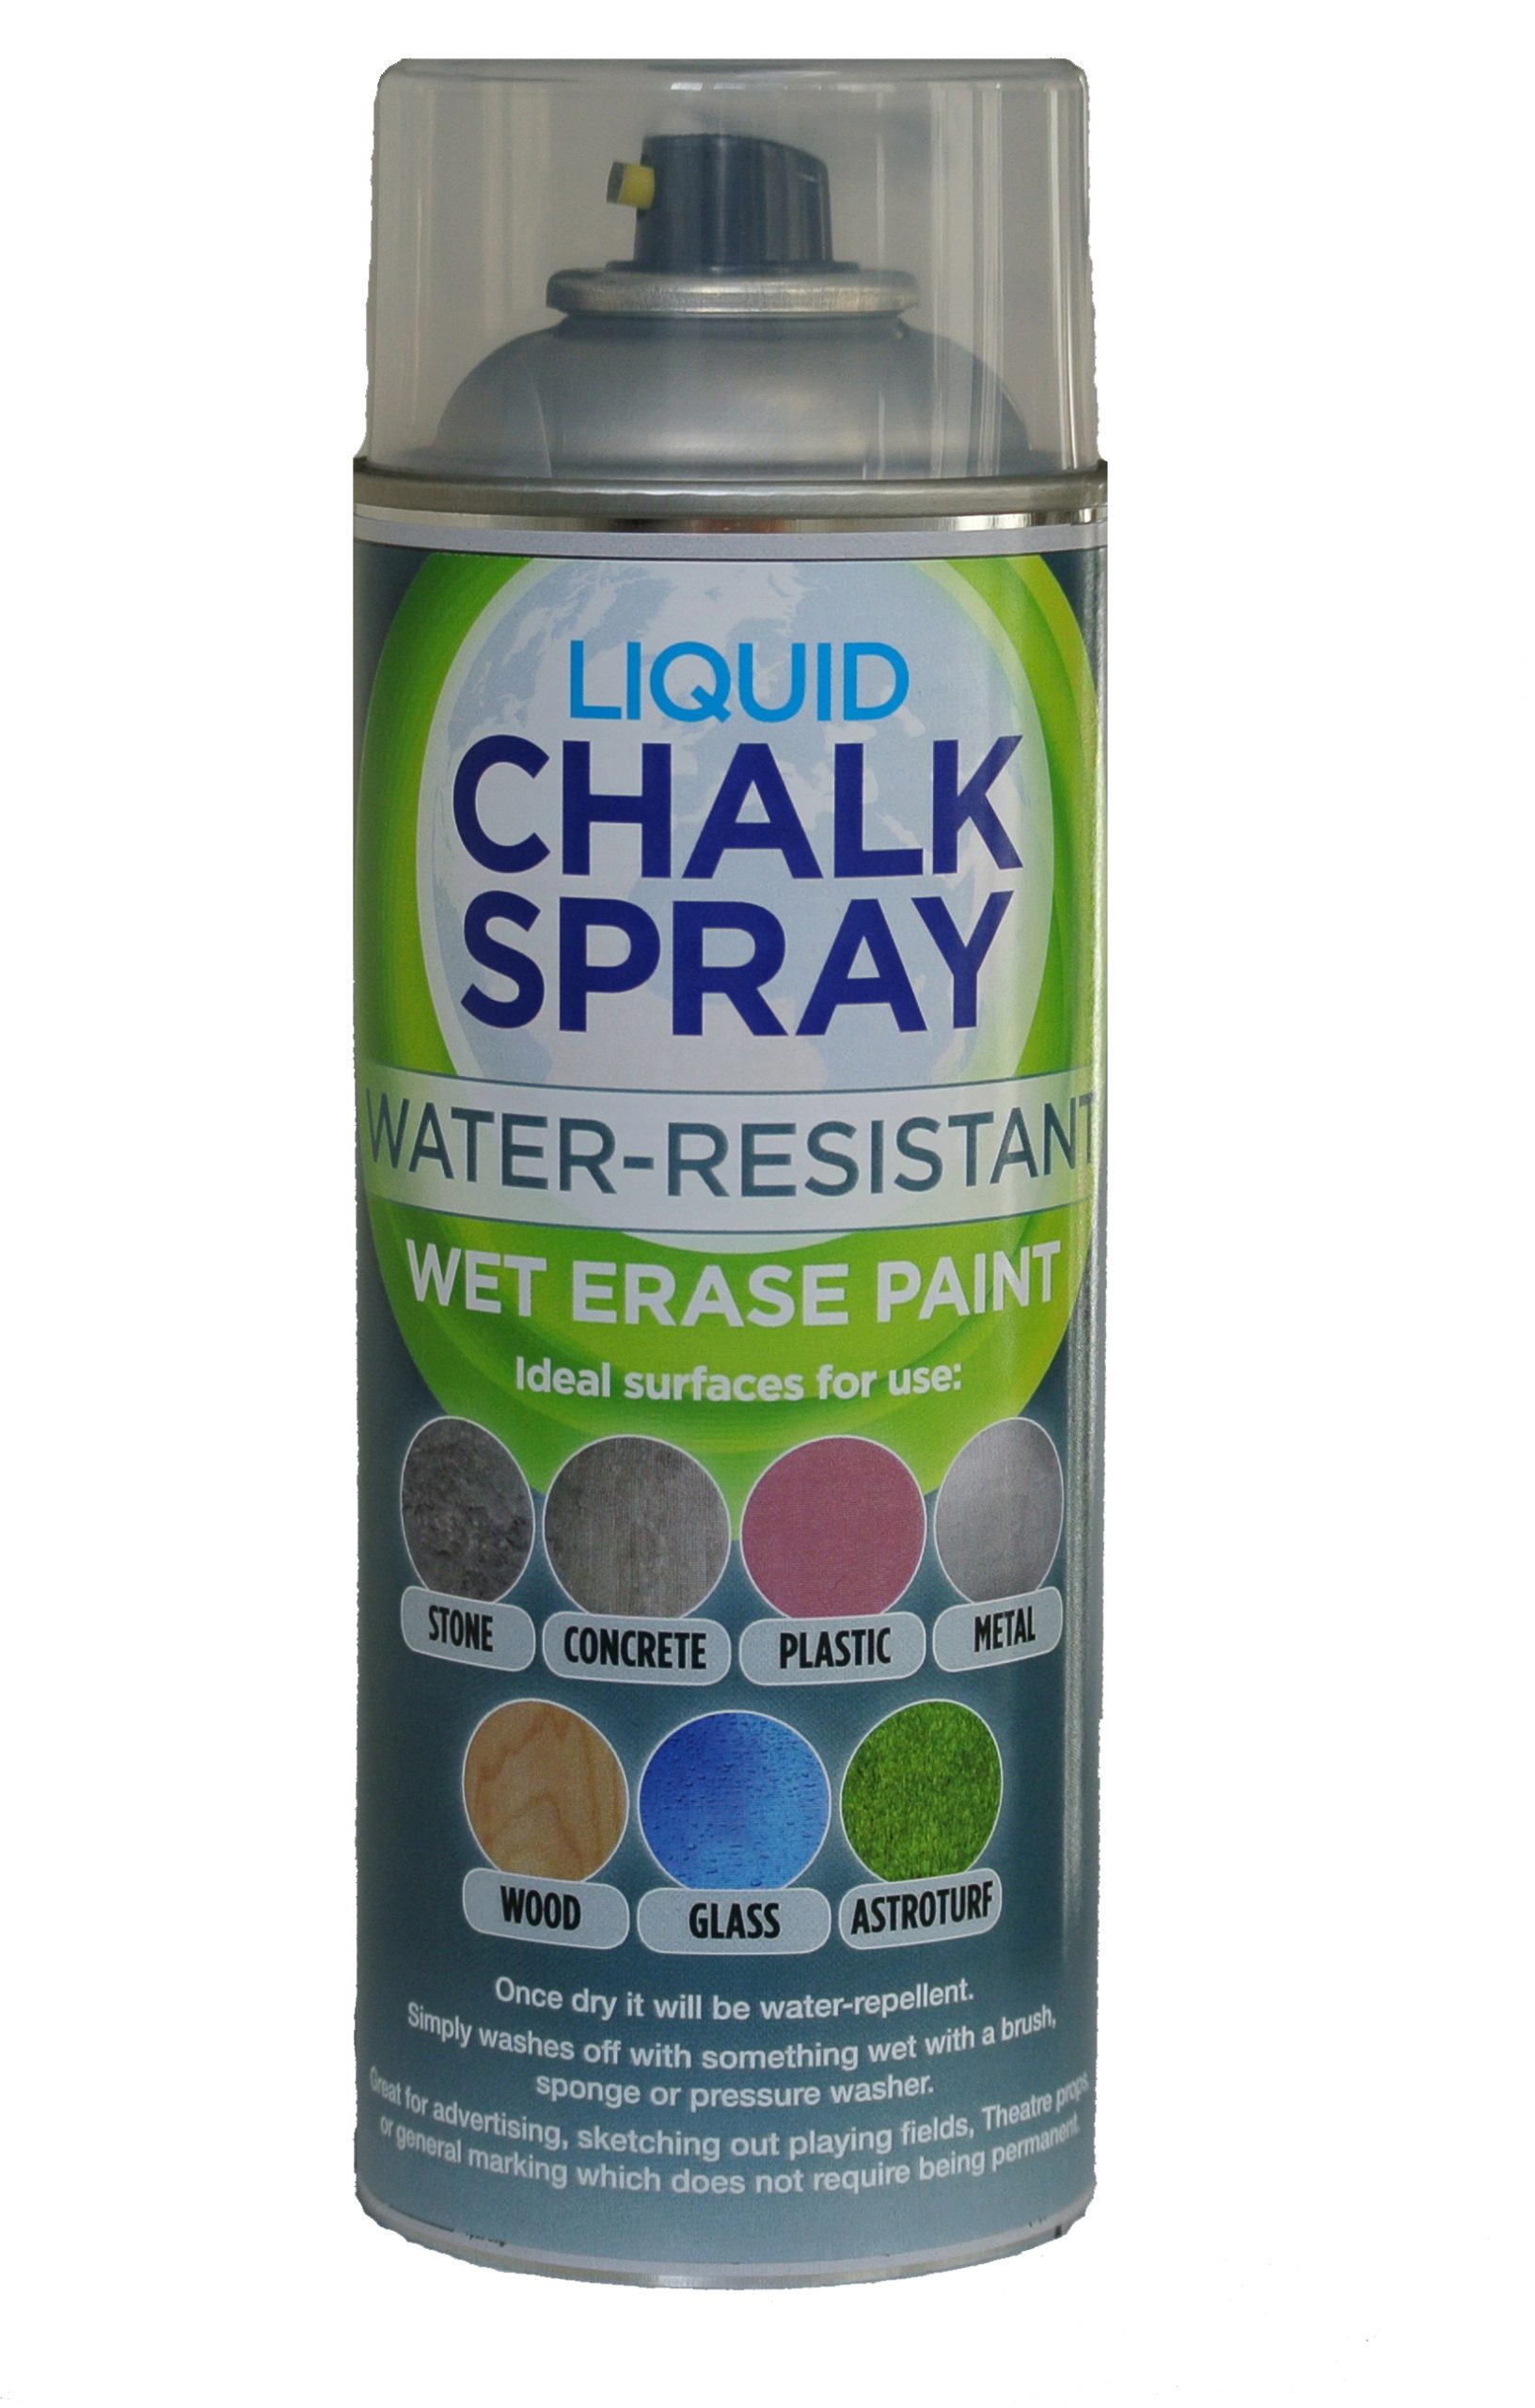 Spray Chalk